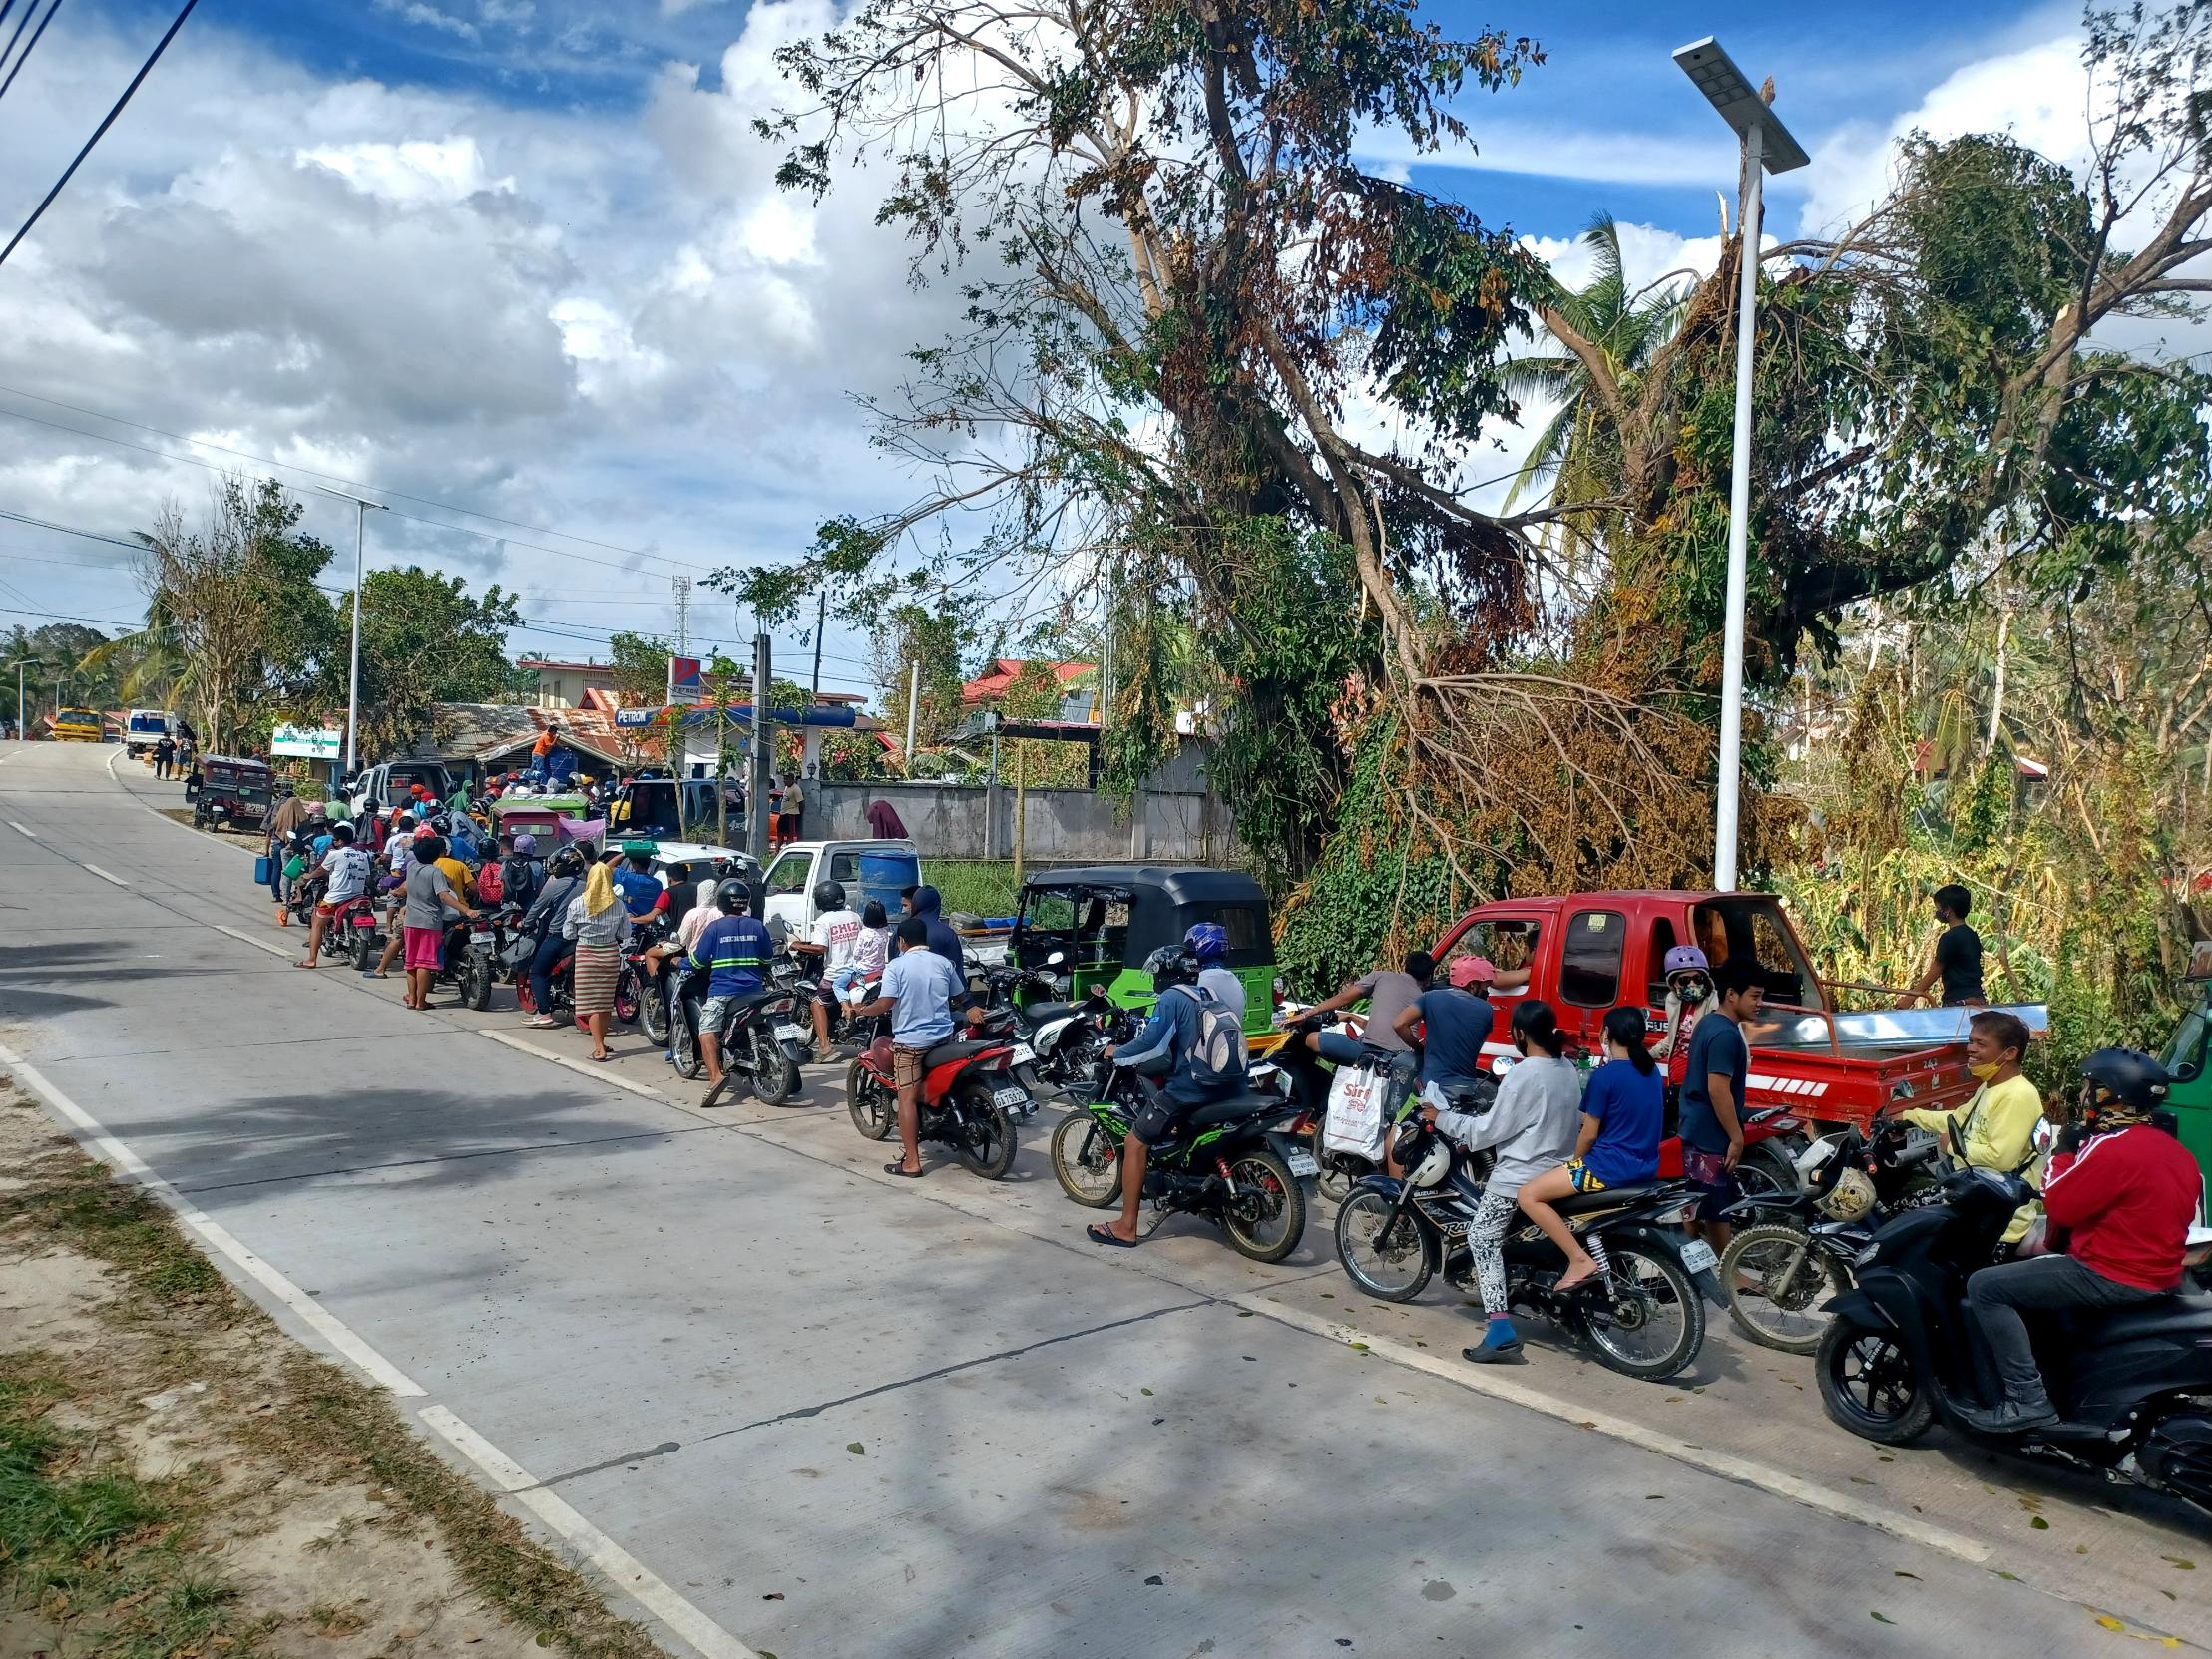 ©A.Dumduma/HI. A line of people extends into the street to buy gasoline after typhoon RAI.